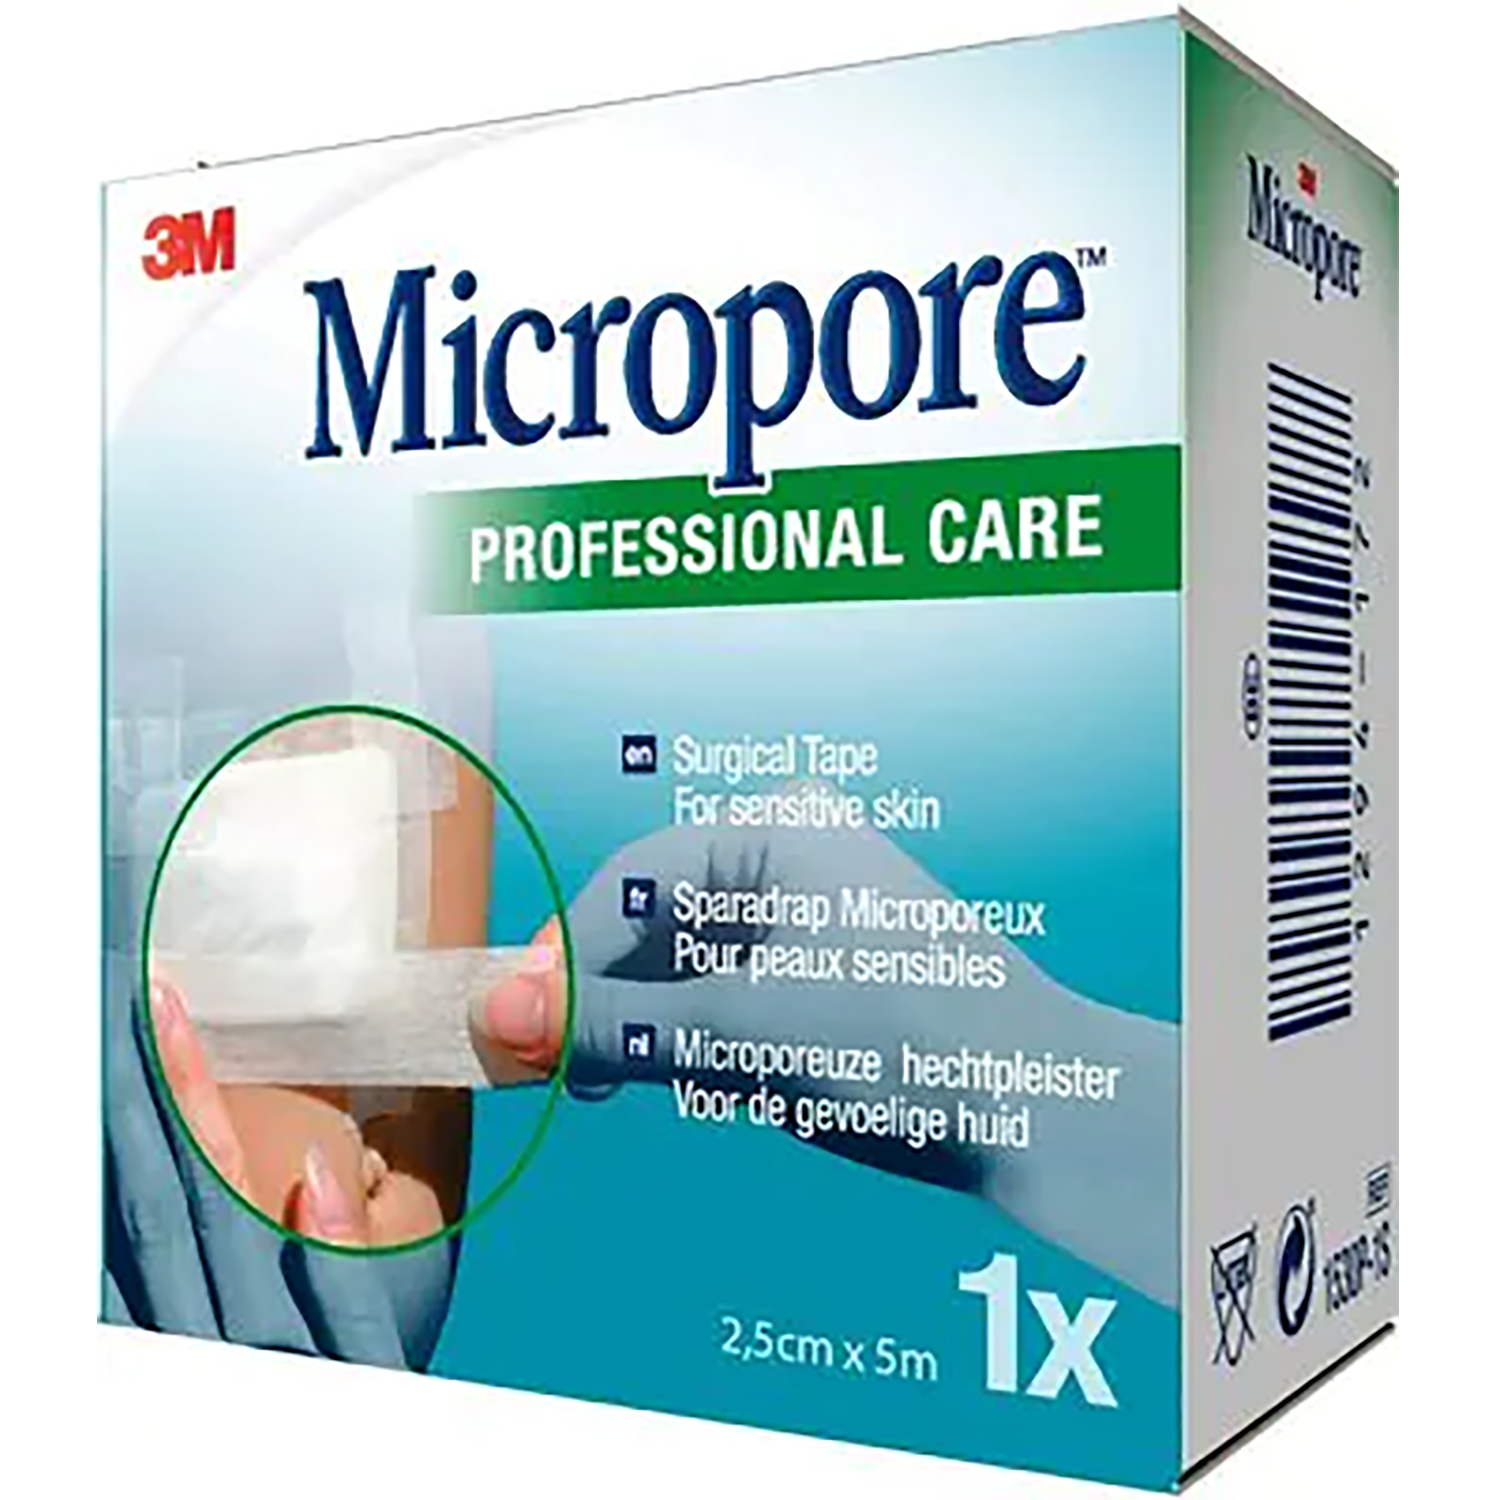 Micropore Surgical Tape | 2.5cm x 5m | Single (2)